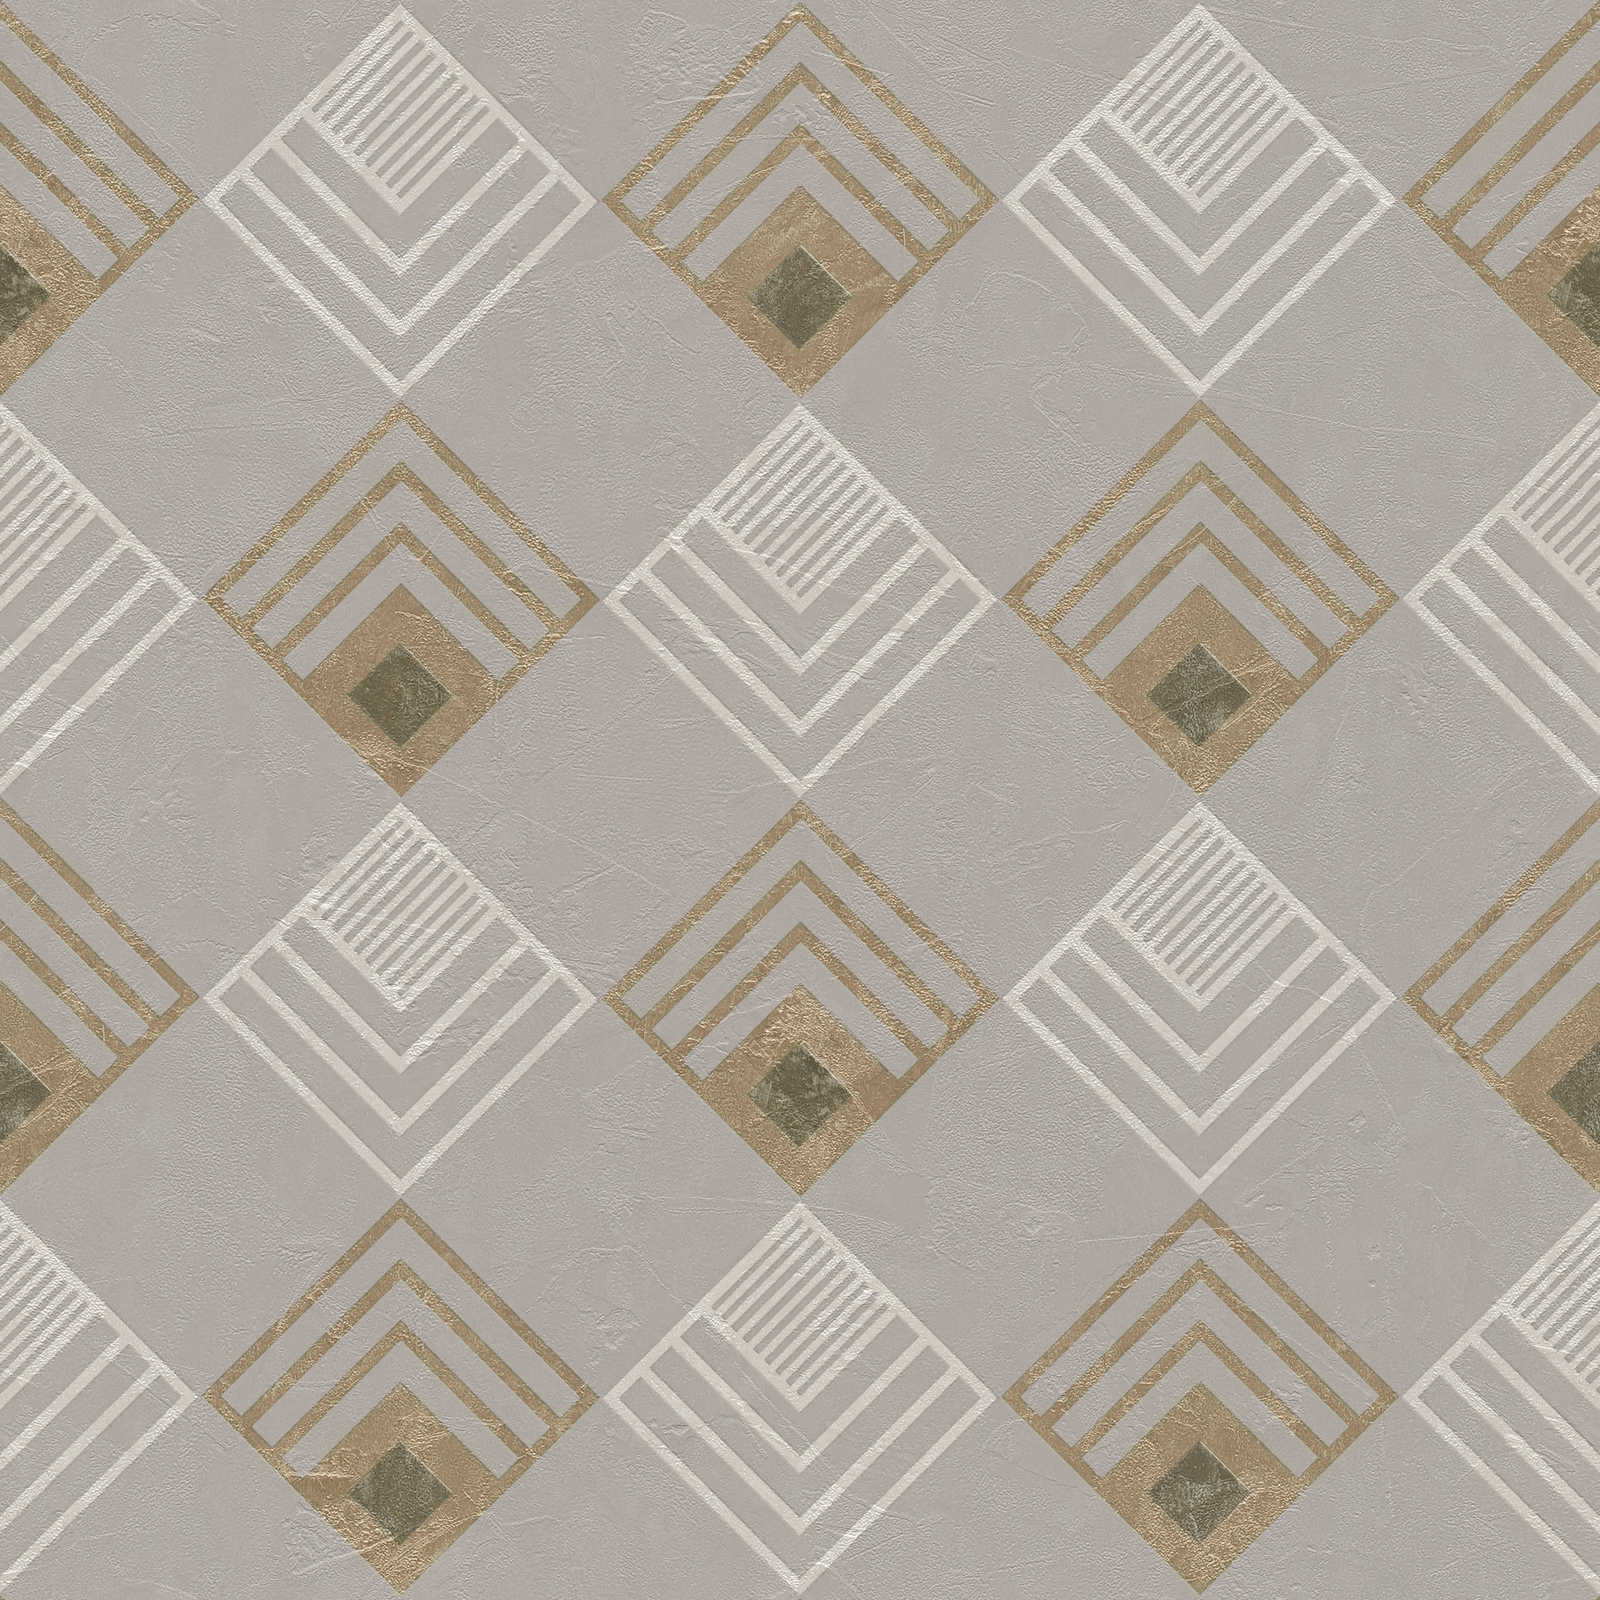 Non-woven wallpaper Art Deco pattern, metallic effect - grey, beige, white
